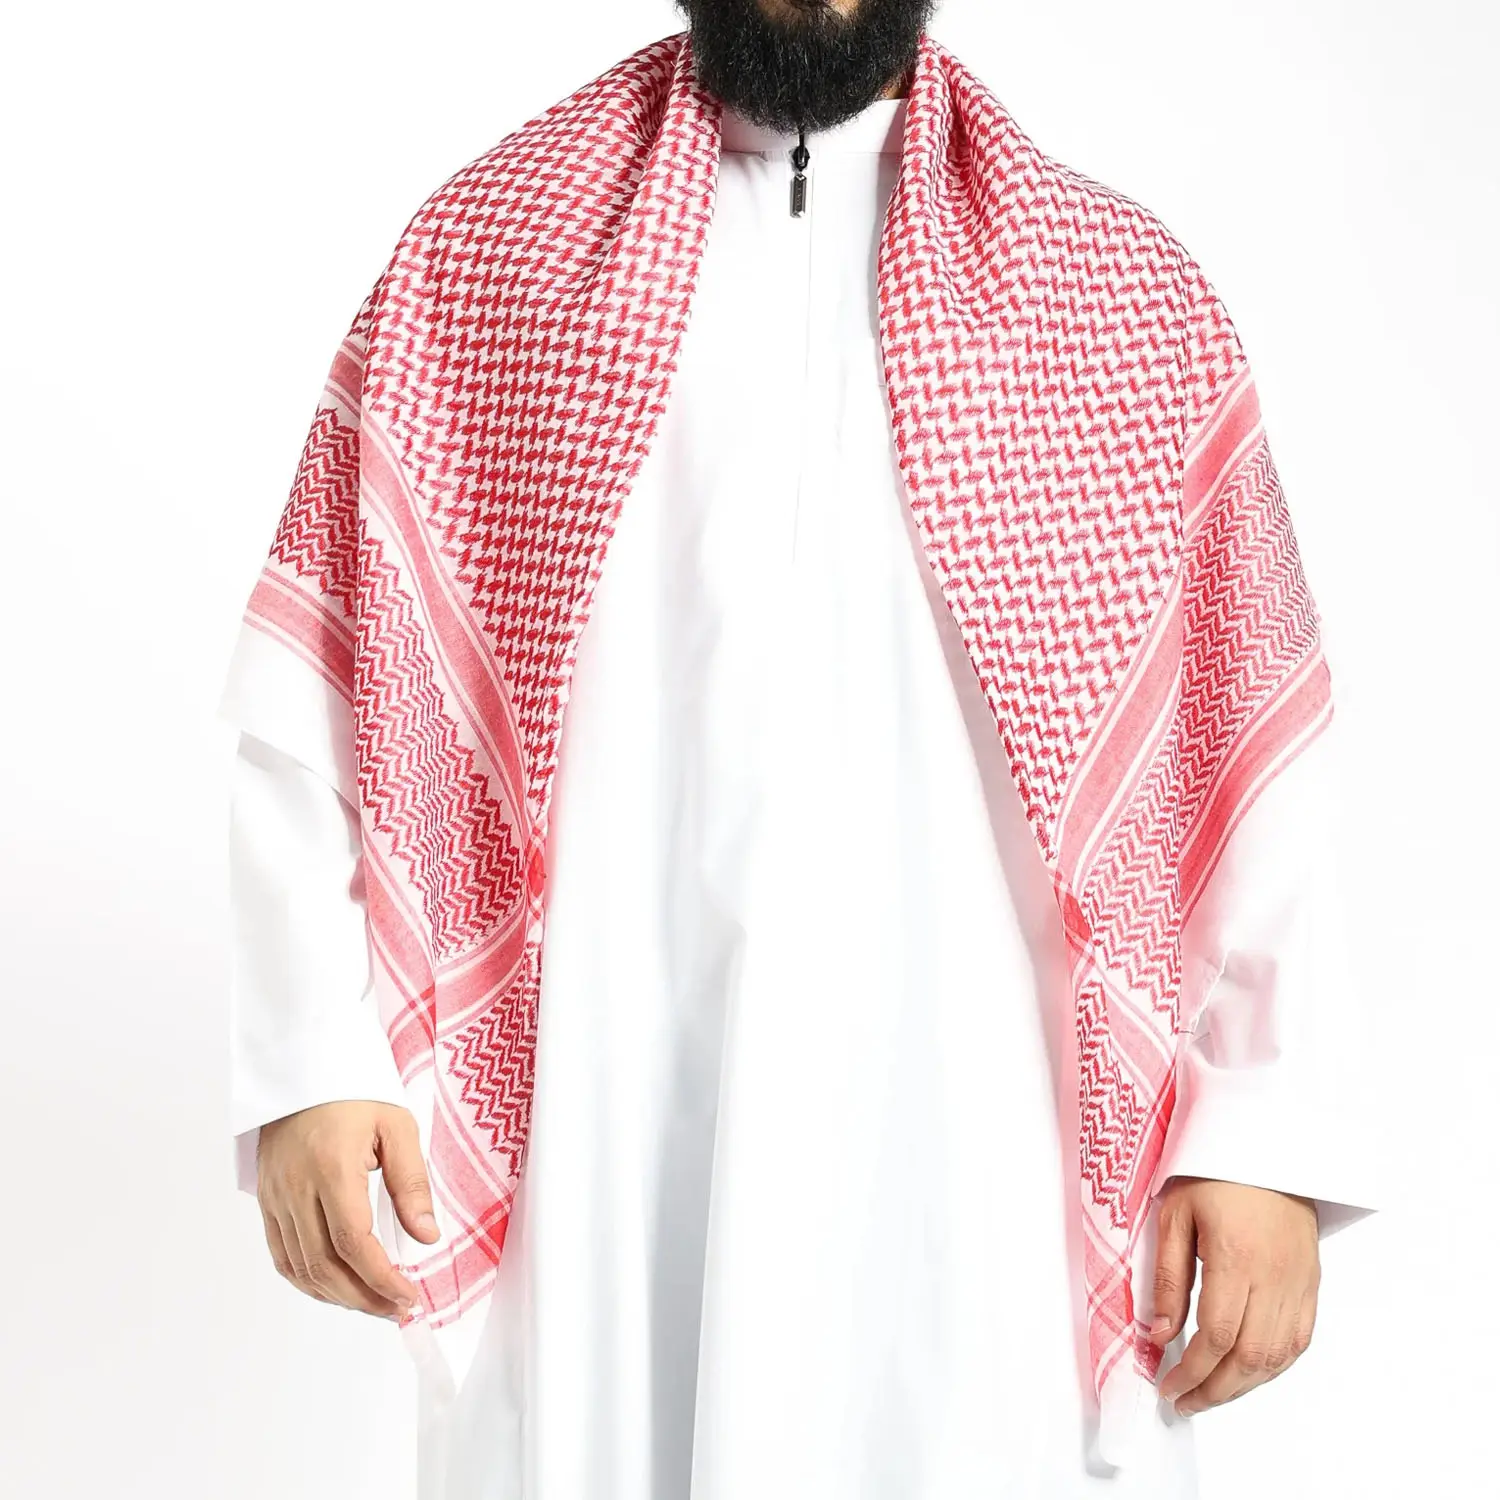 Classic Pattern Muslim Men Red Arab Large Square Palestine Scarf Shemagh Designs Cotton Headscarf Keffiyeh